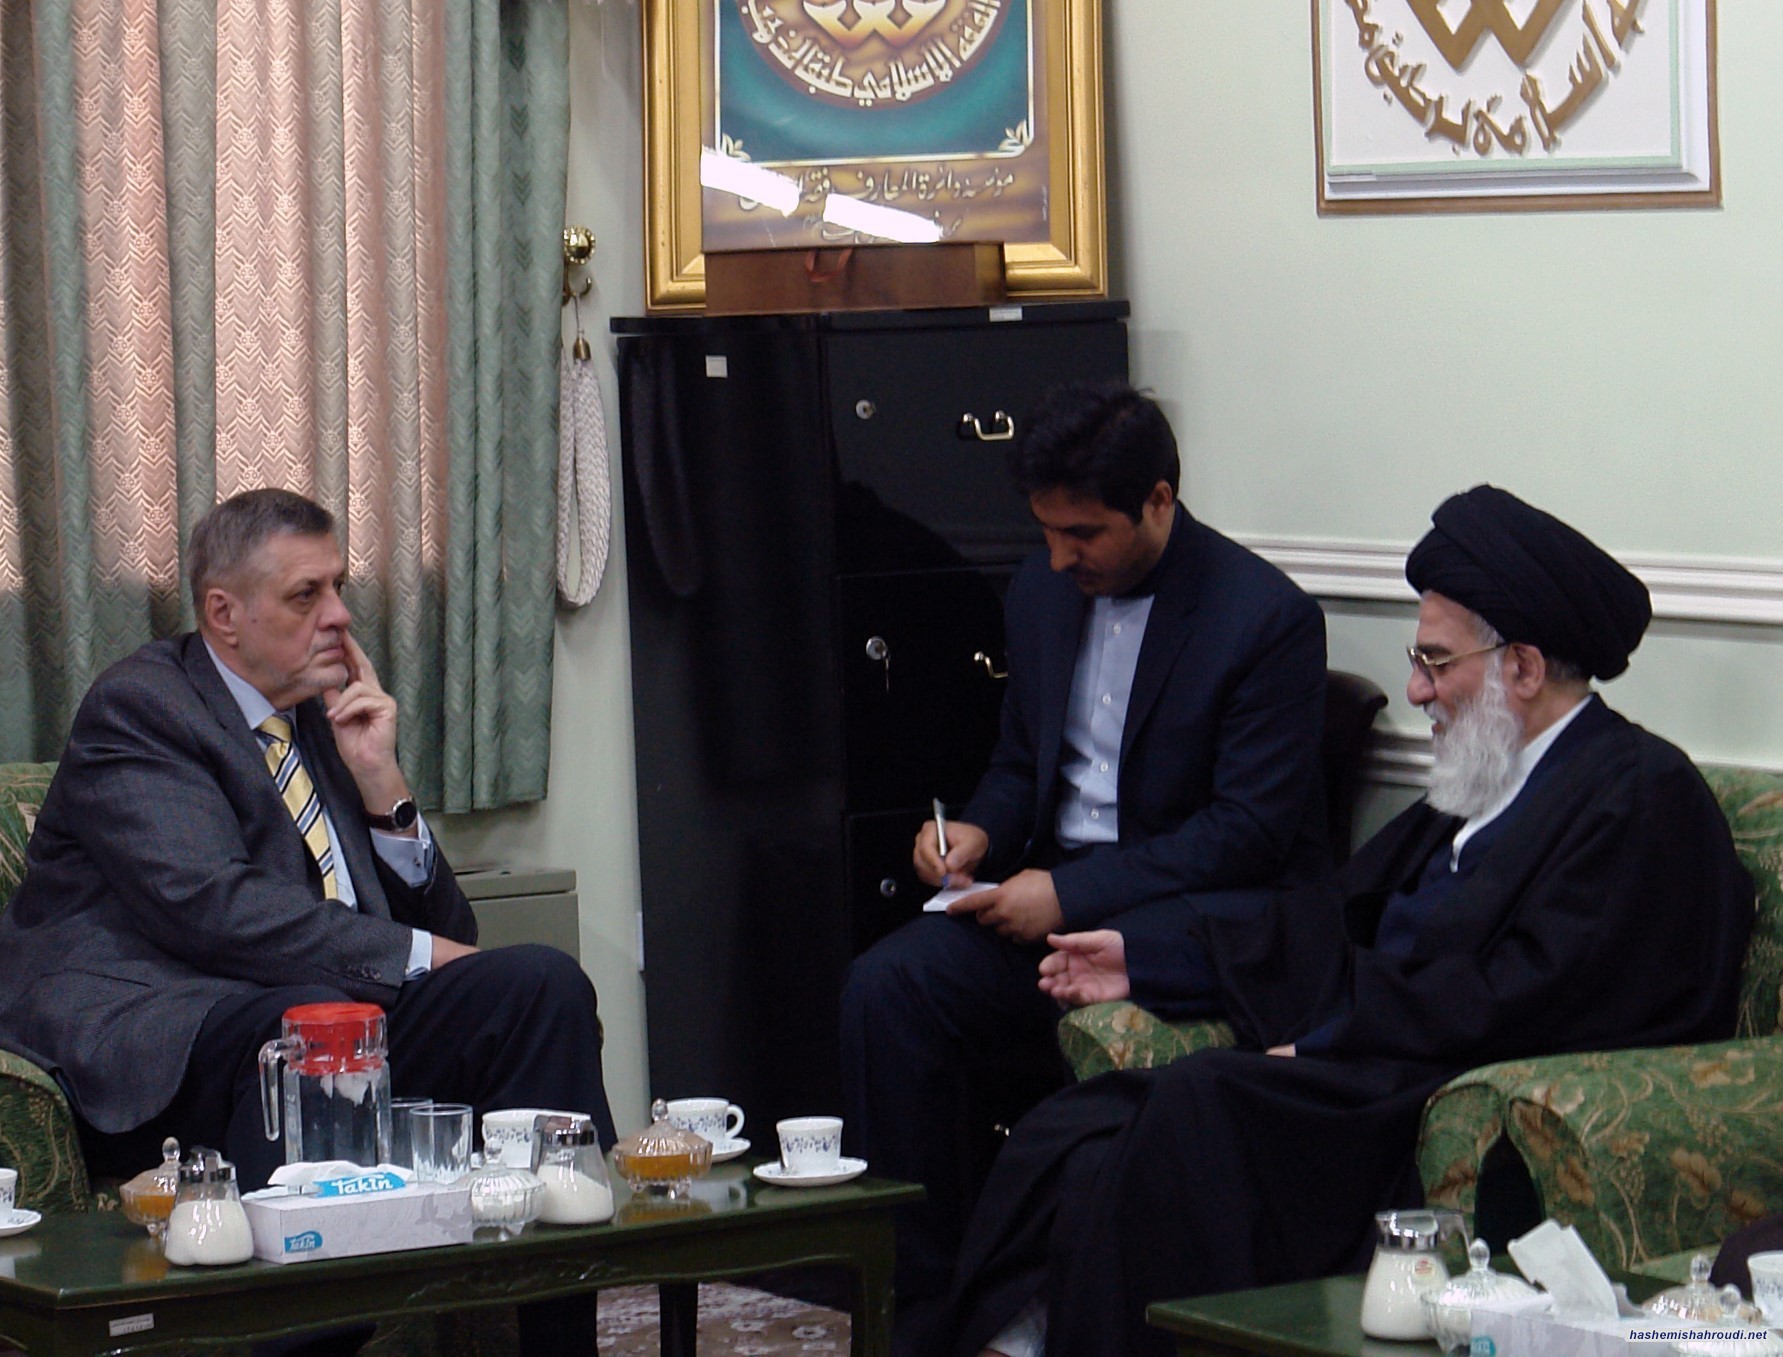 Meeting of U.N.’s representative in Iraq with Grand Ayatollah Hashemi Shahroudi